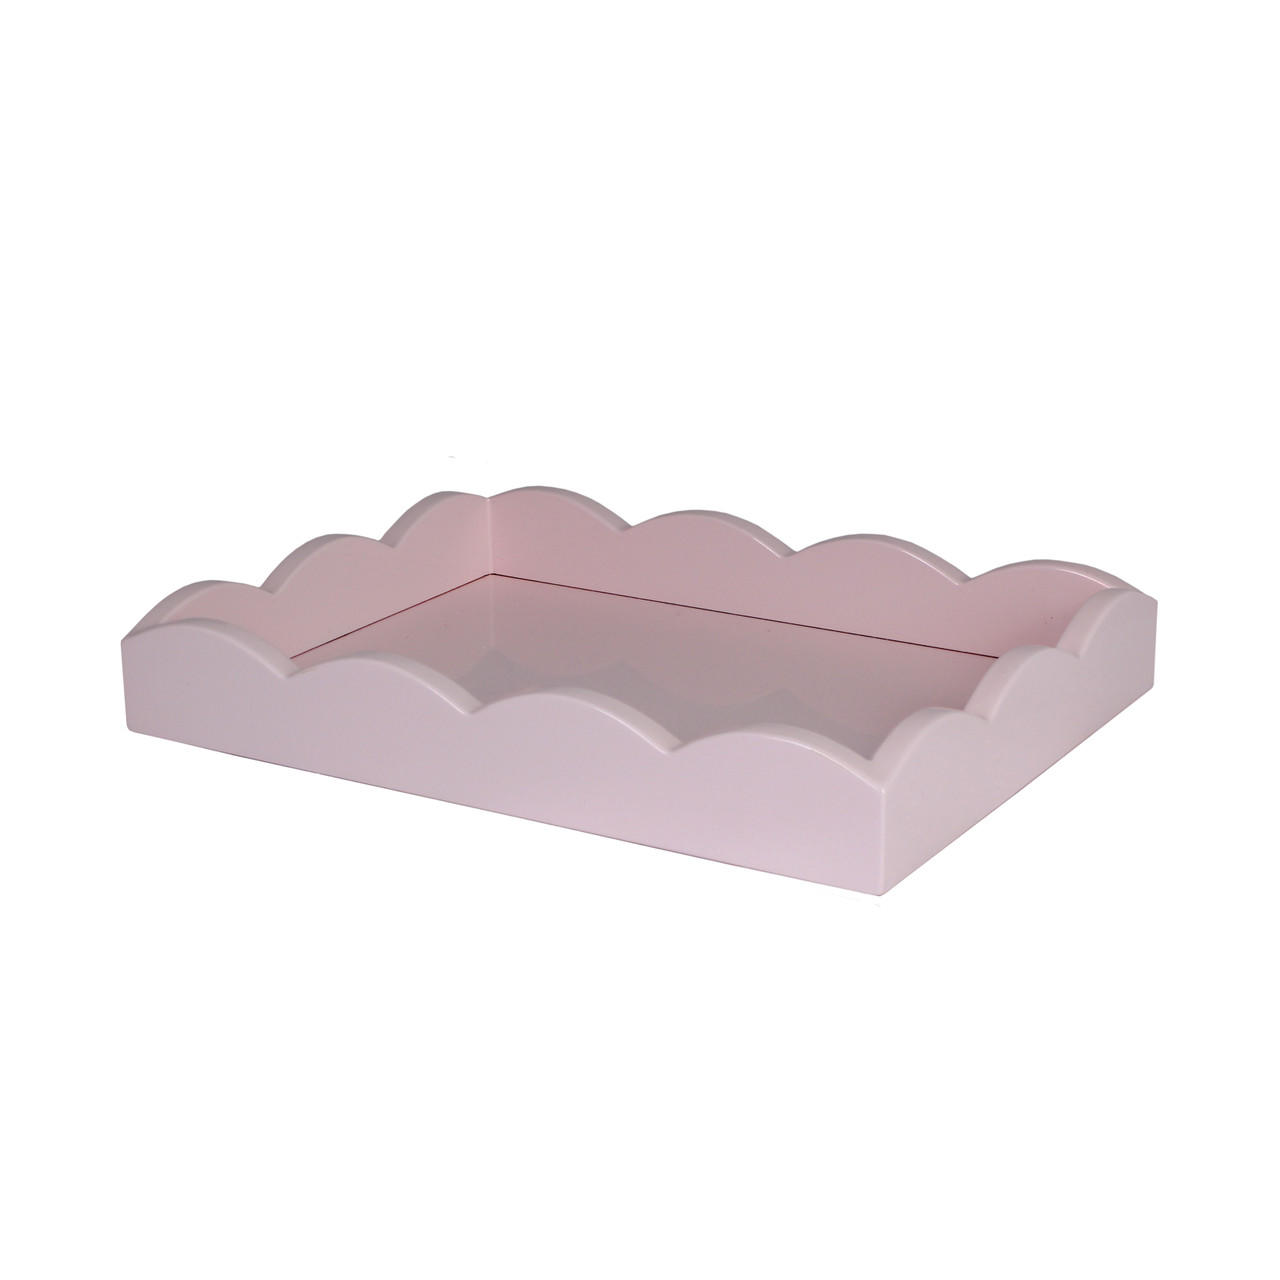 11x8 Scalloped Tray Pale Pink